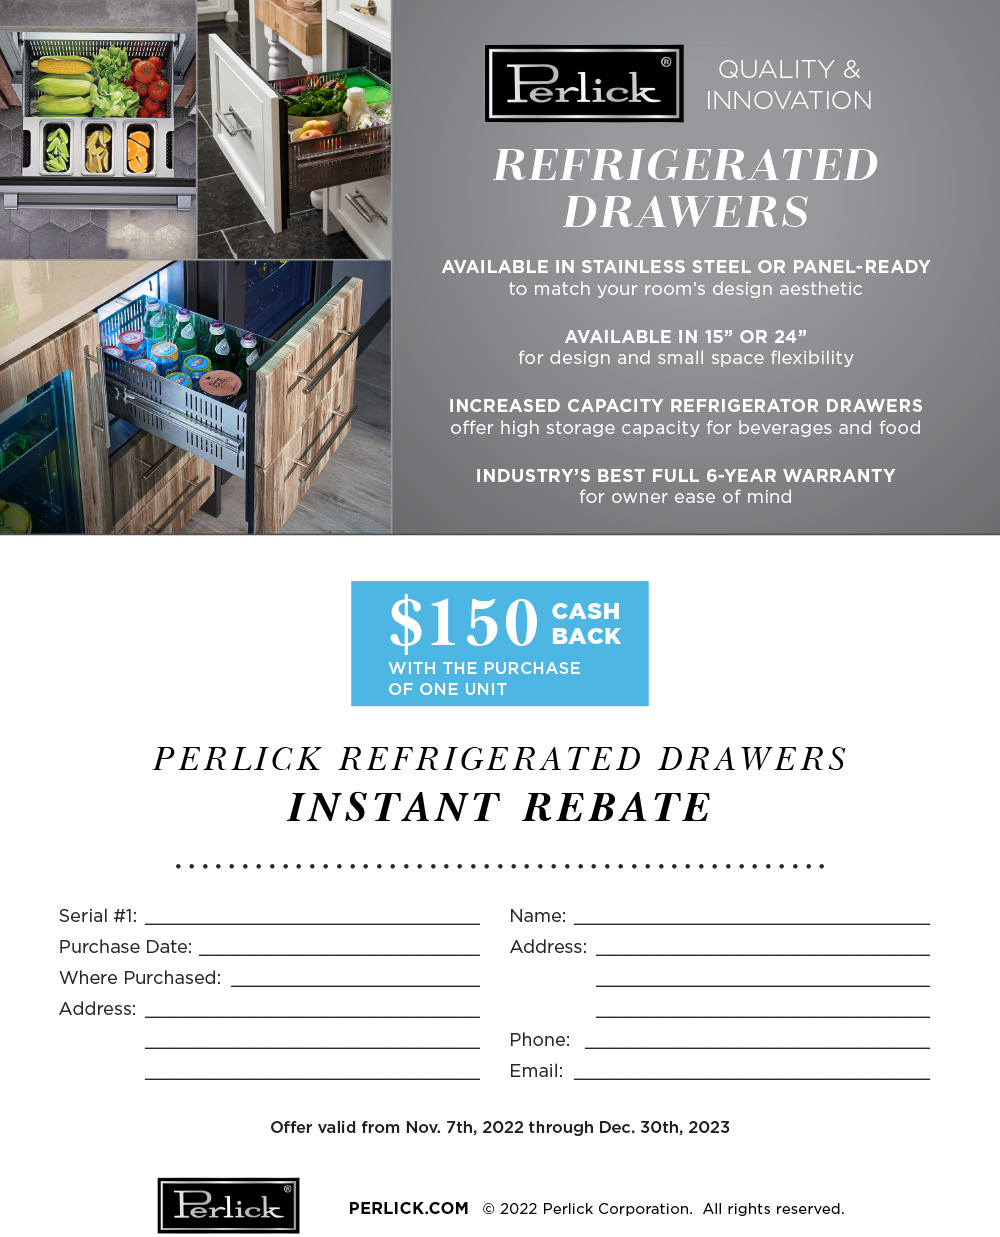 refrigerator-rebate-form-2023-energy-smart-nola